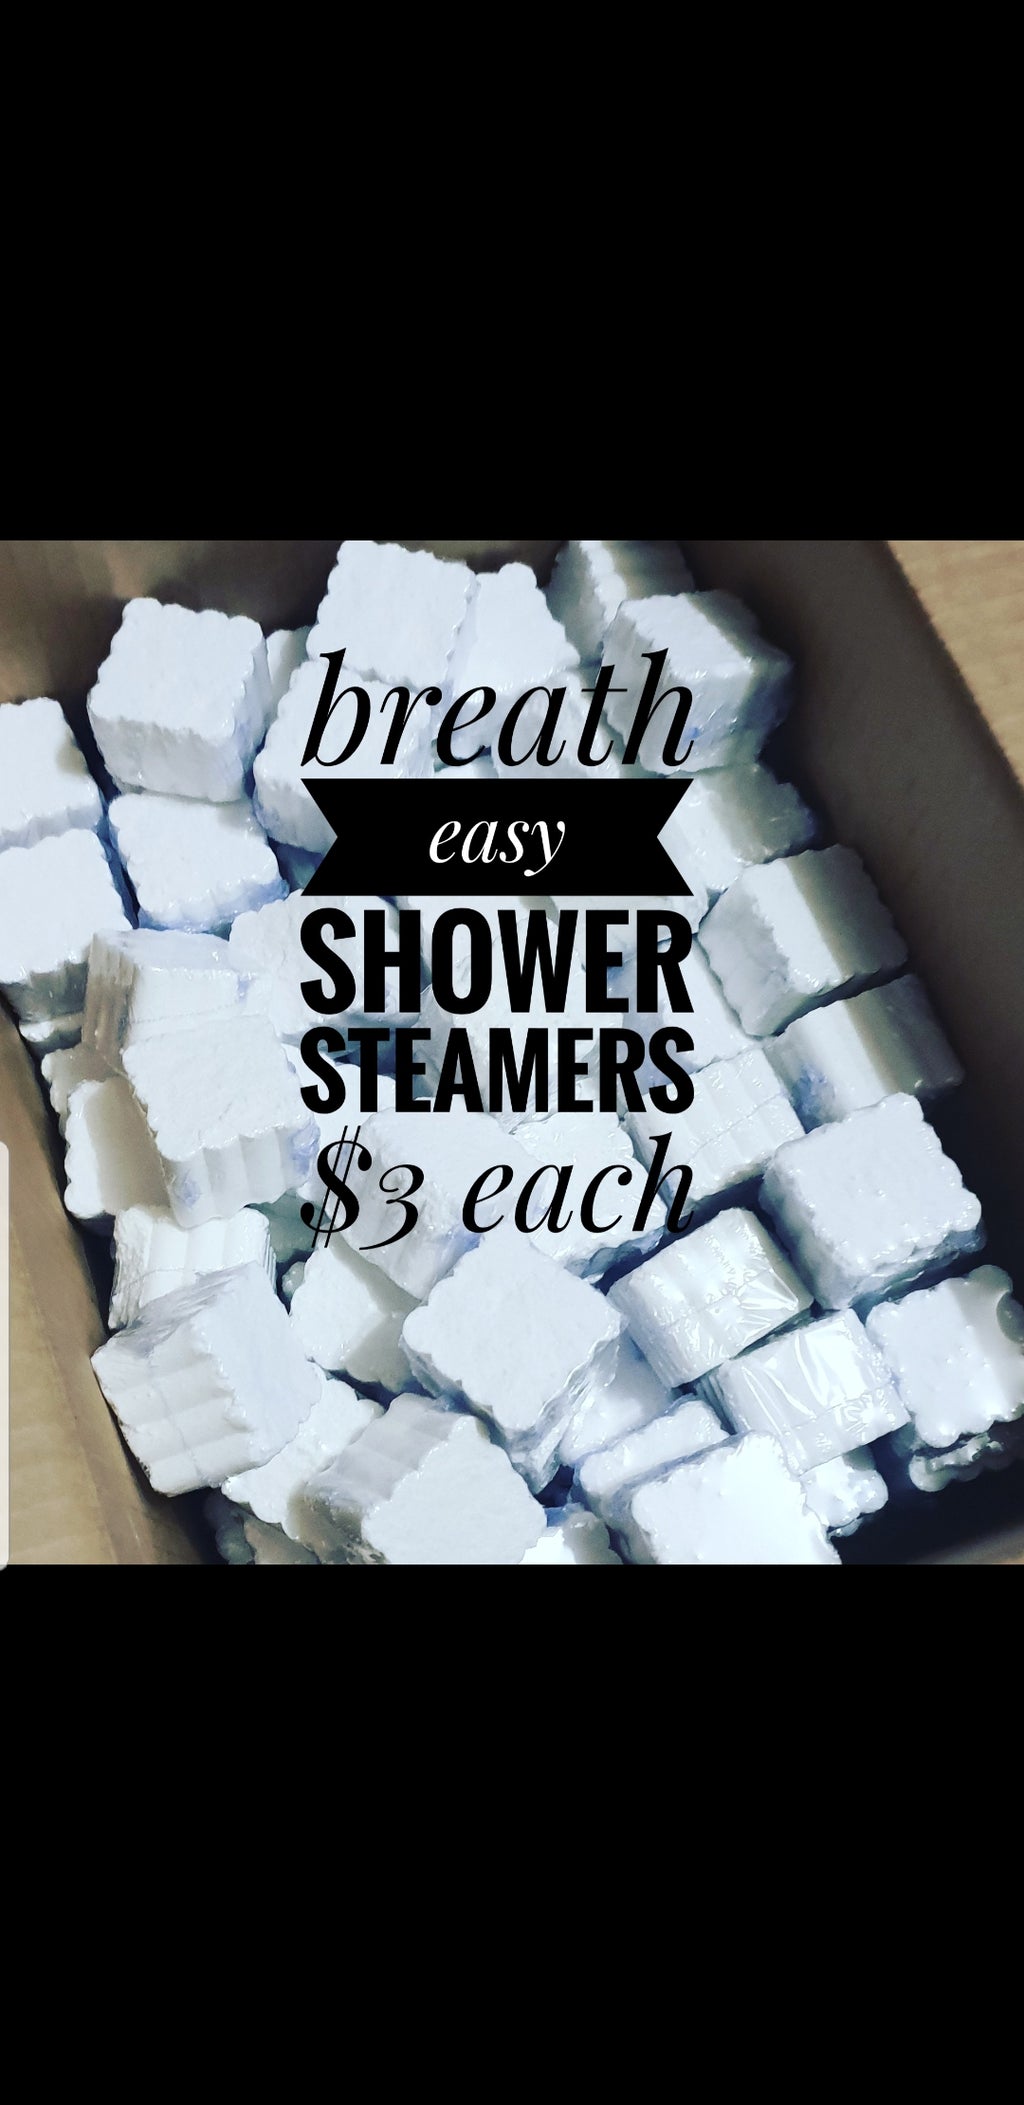 Shower steamers - essential oils